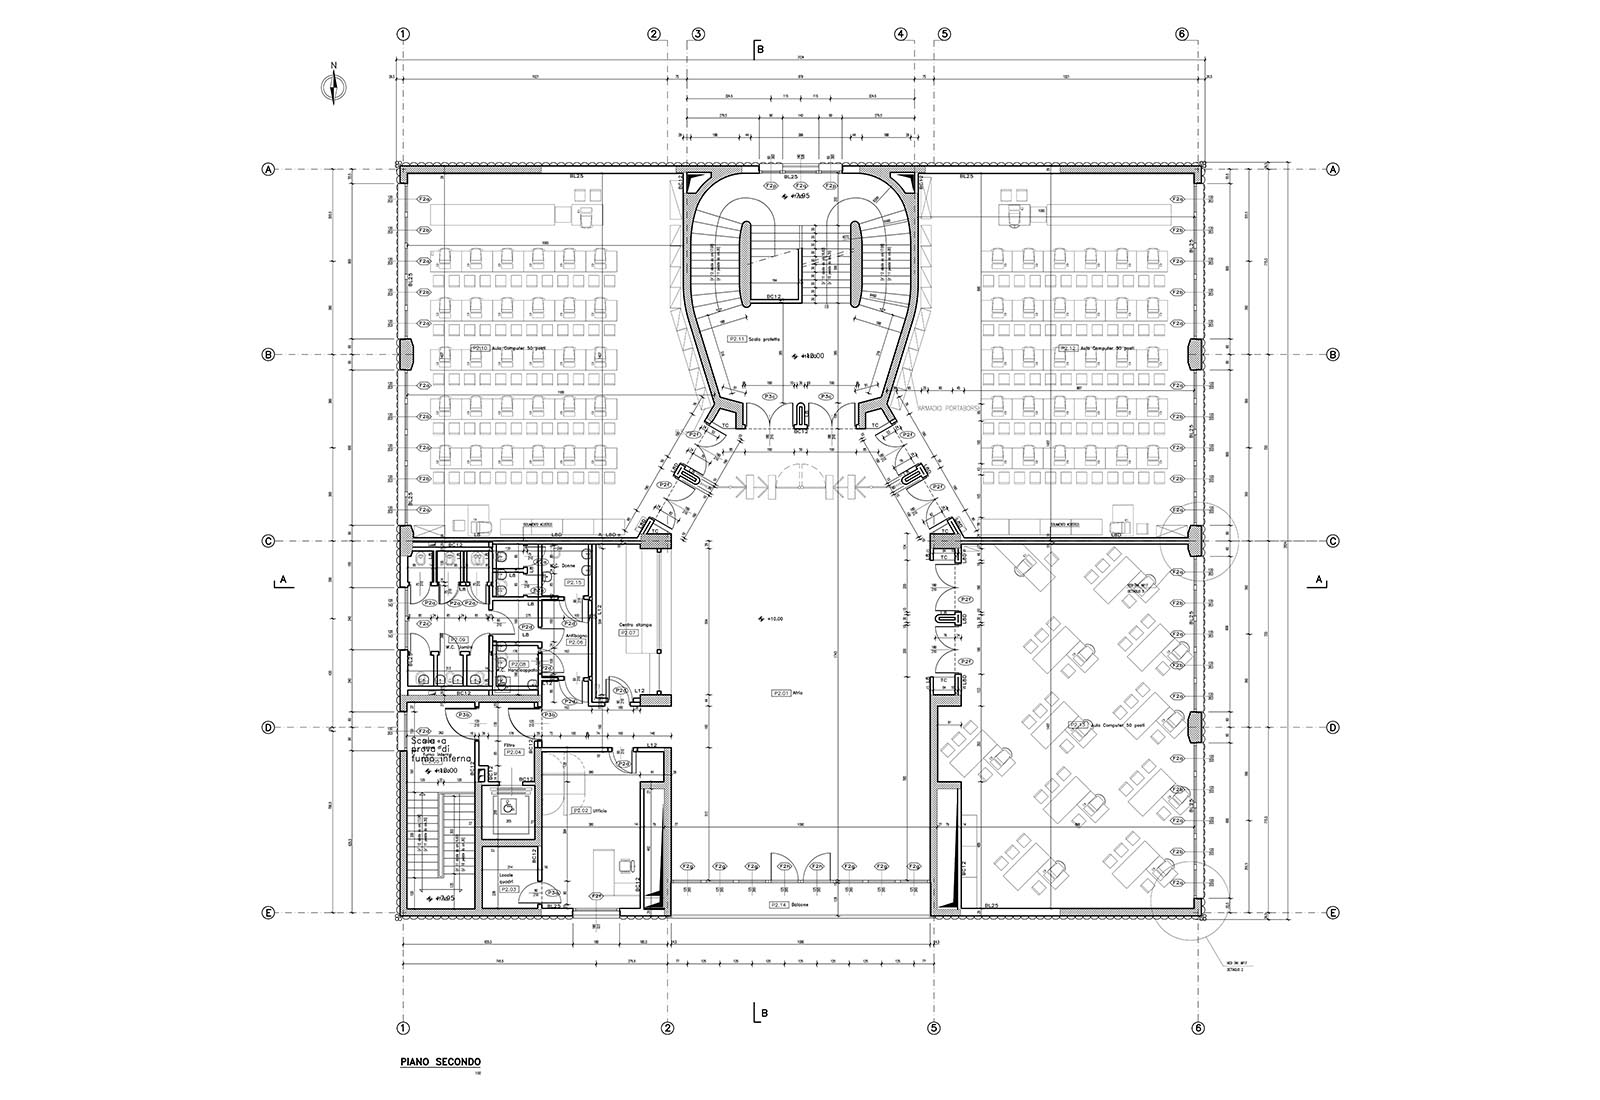 Building 25 Politecnico di Milano - Second floor plan furnished